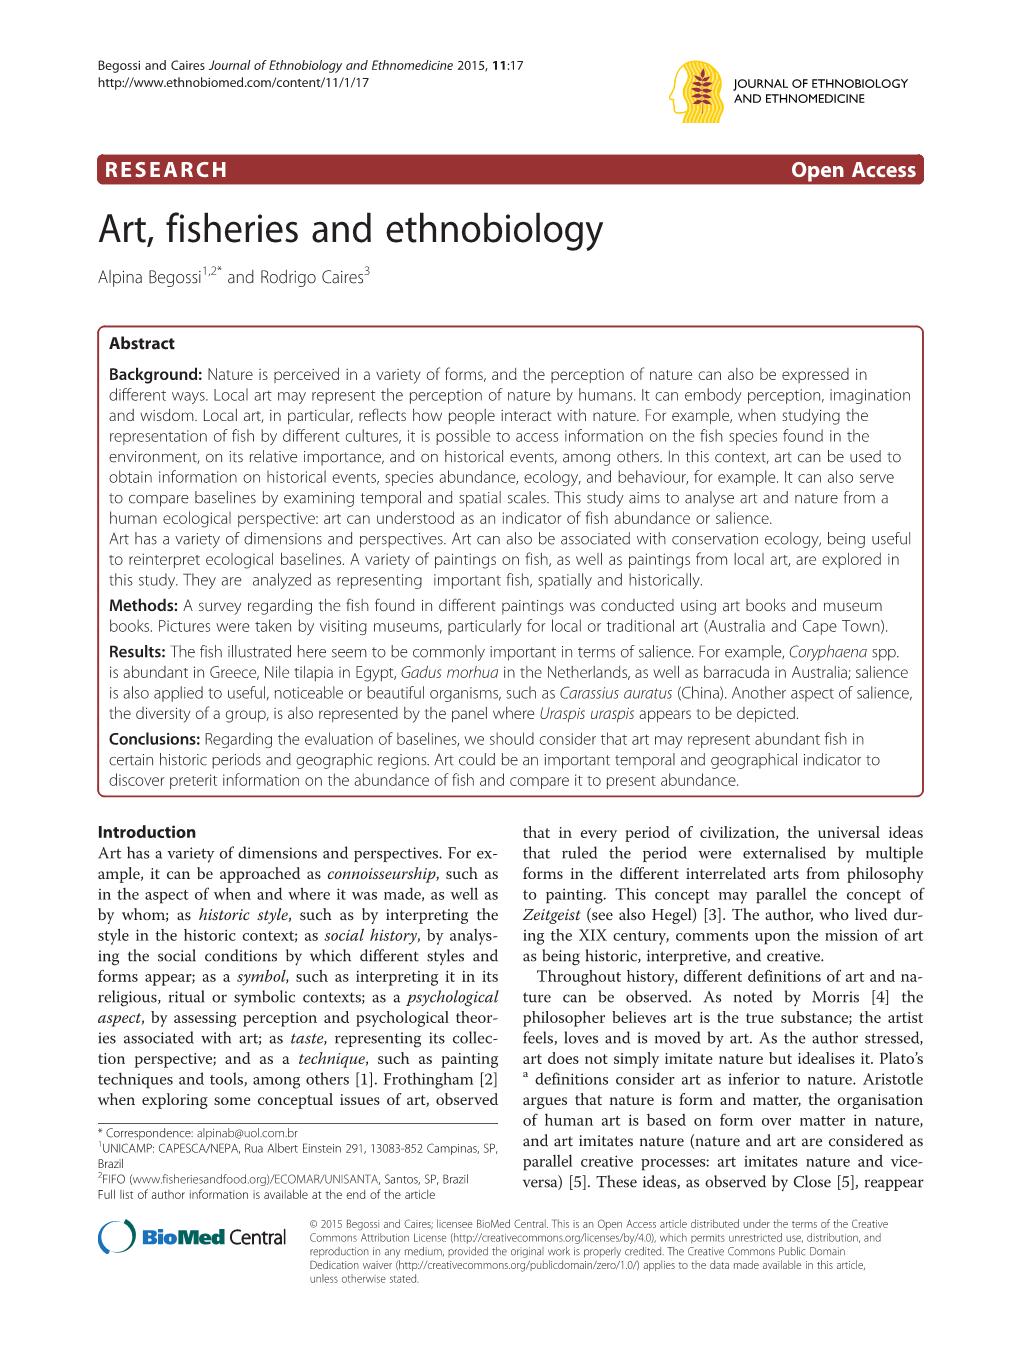 Art, Fisheries and Ethnobiology Alpina Begossi1,2* and Rodrigo Caires3